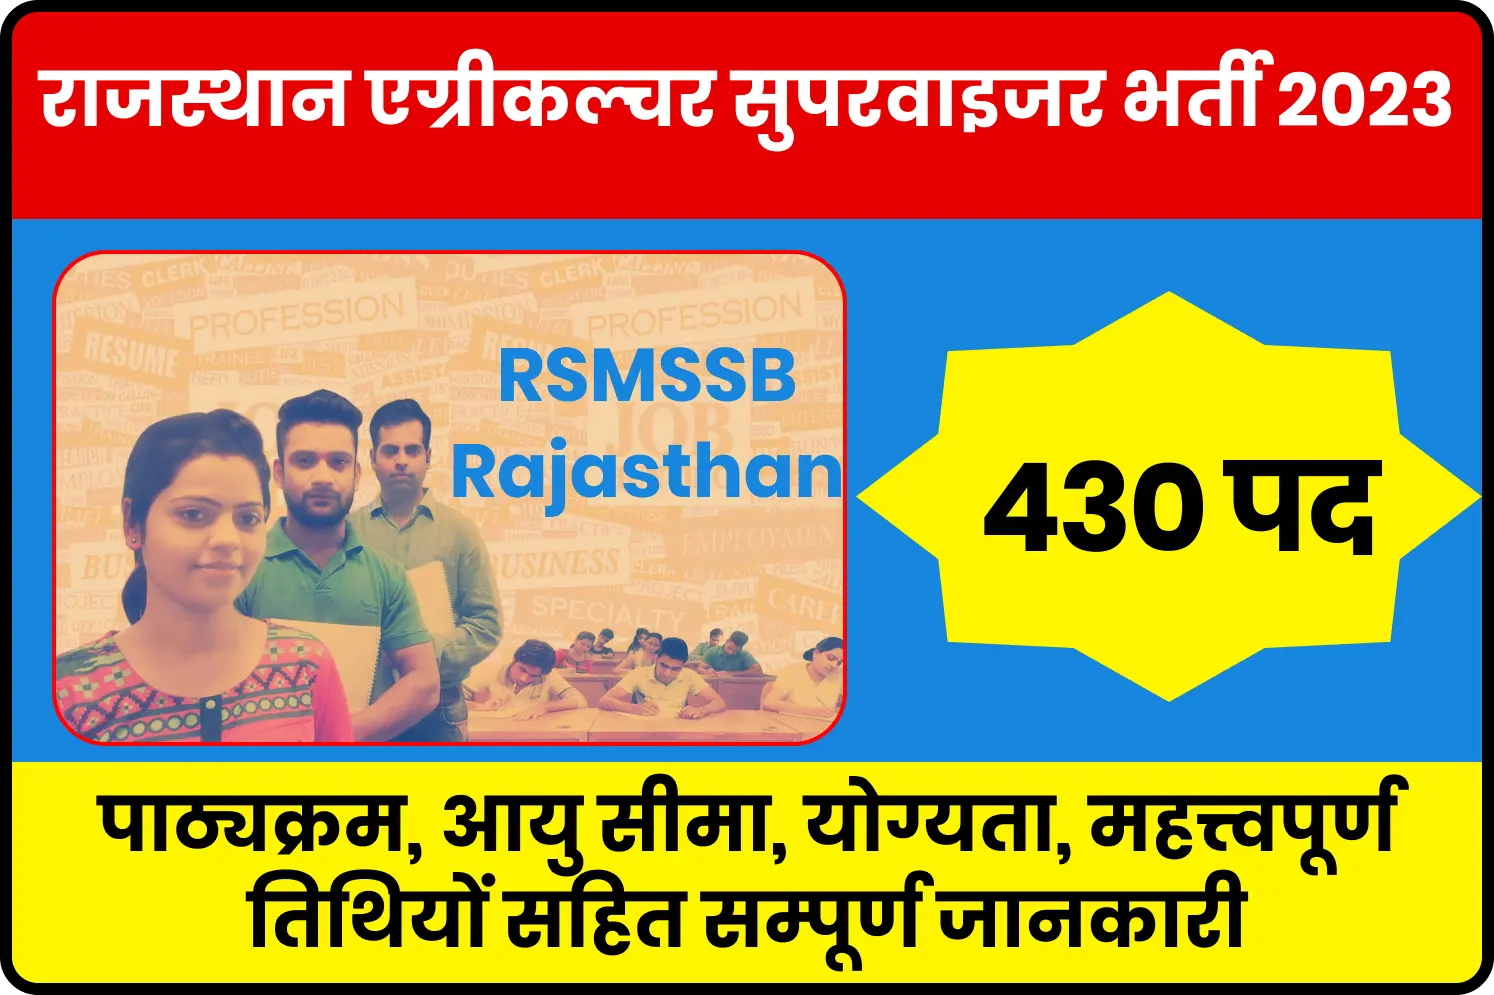 Rajasthan Agriculture Supervisor Recruitment 2023